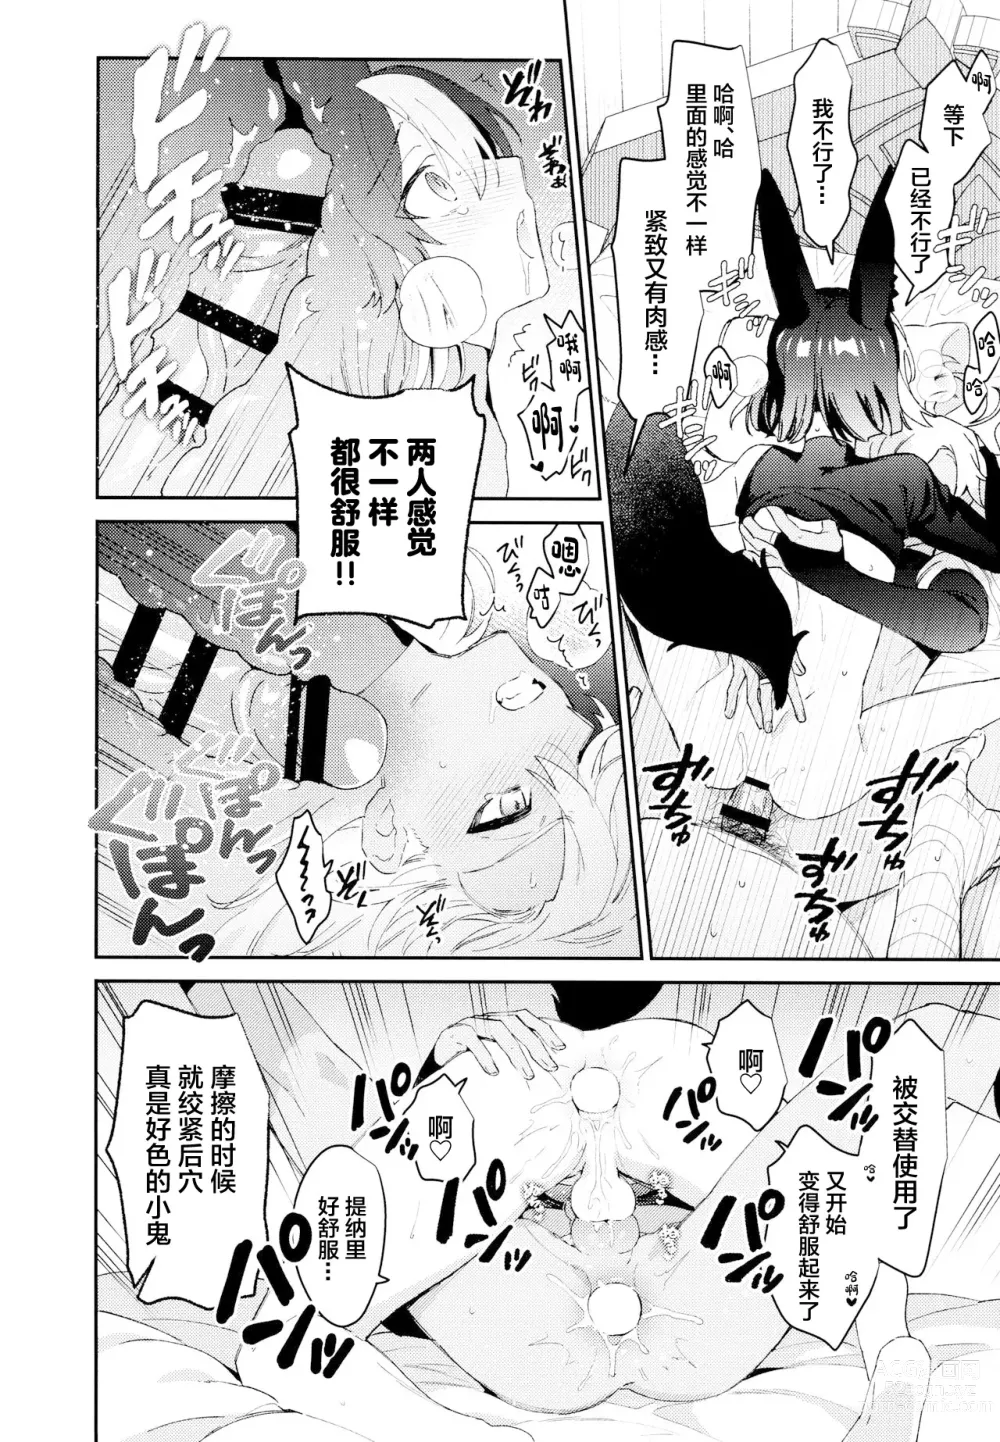 Page 50 of doujinshi ORE:CN